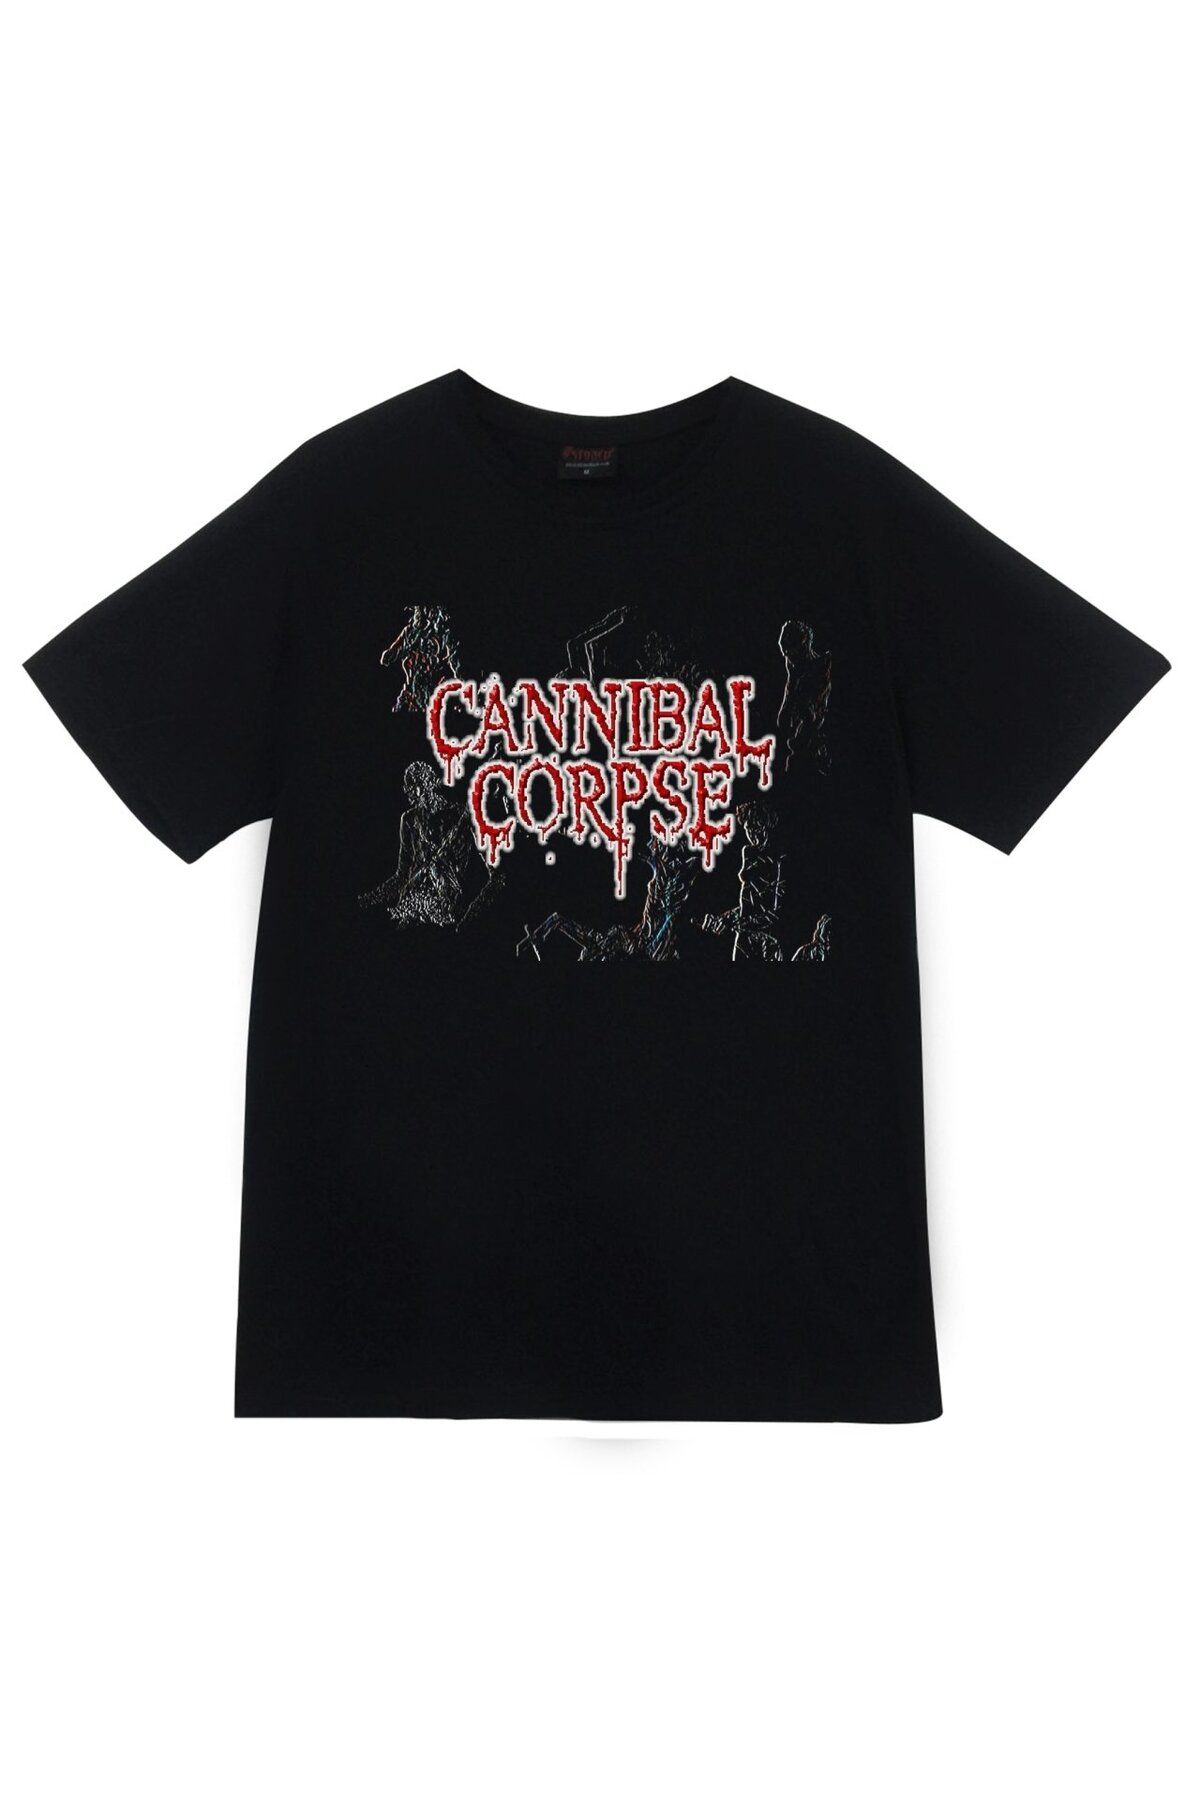 fame-stoned Cannibal Corpse Baskılı T-shirt